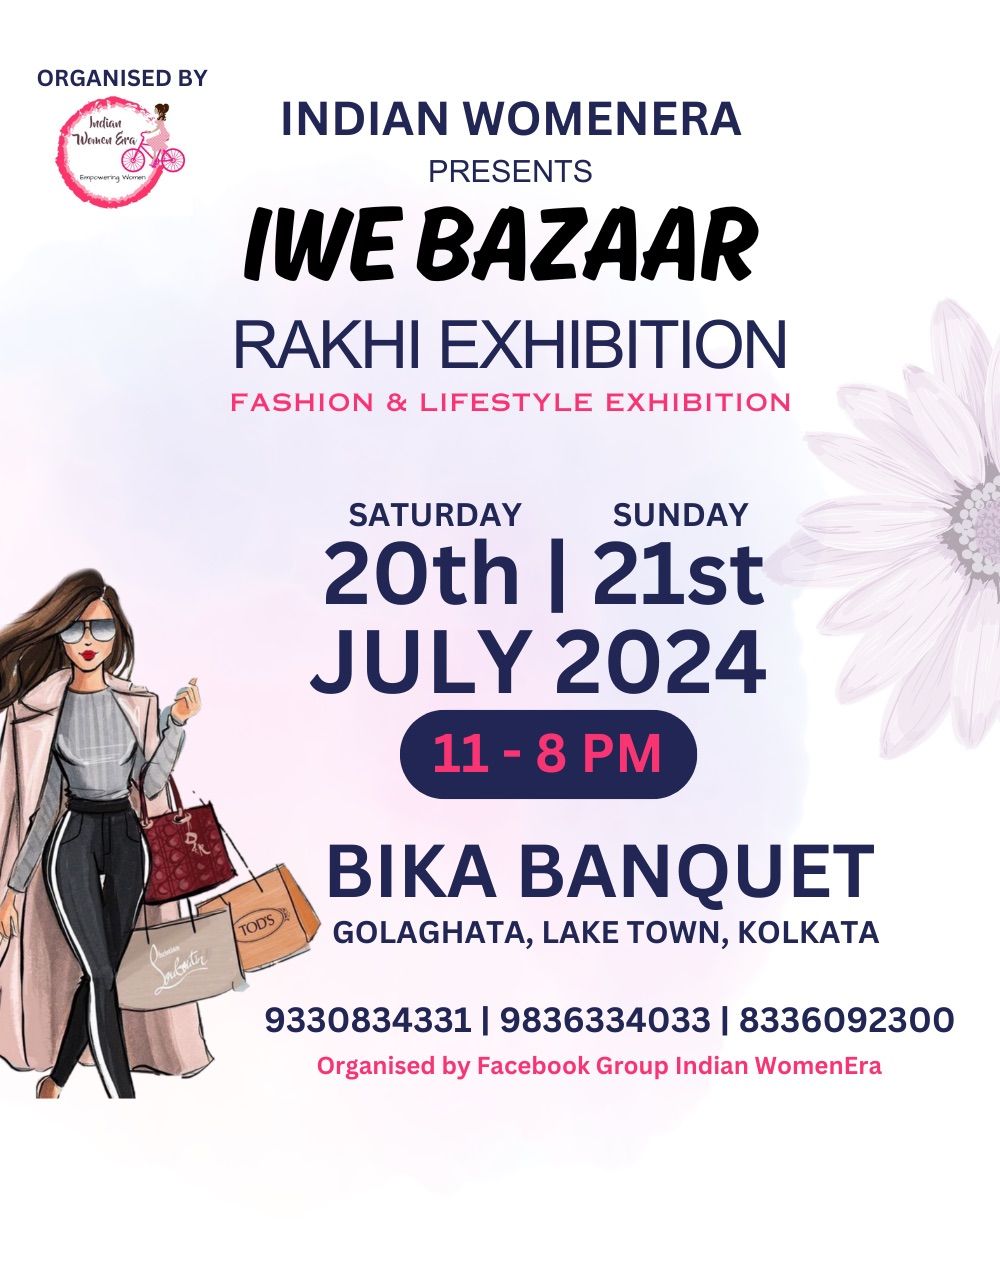 Rakhi Exhibition